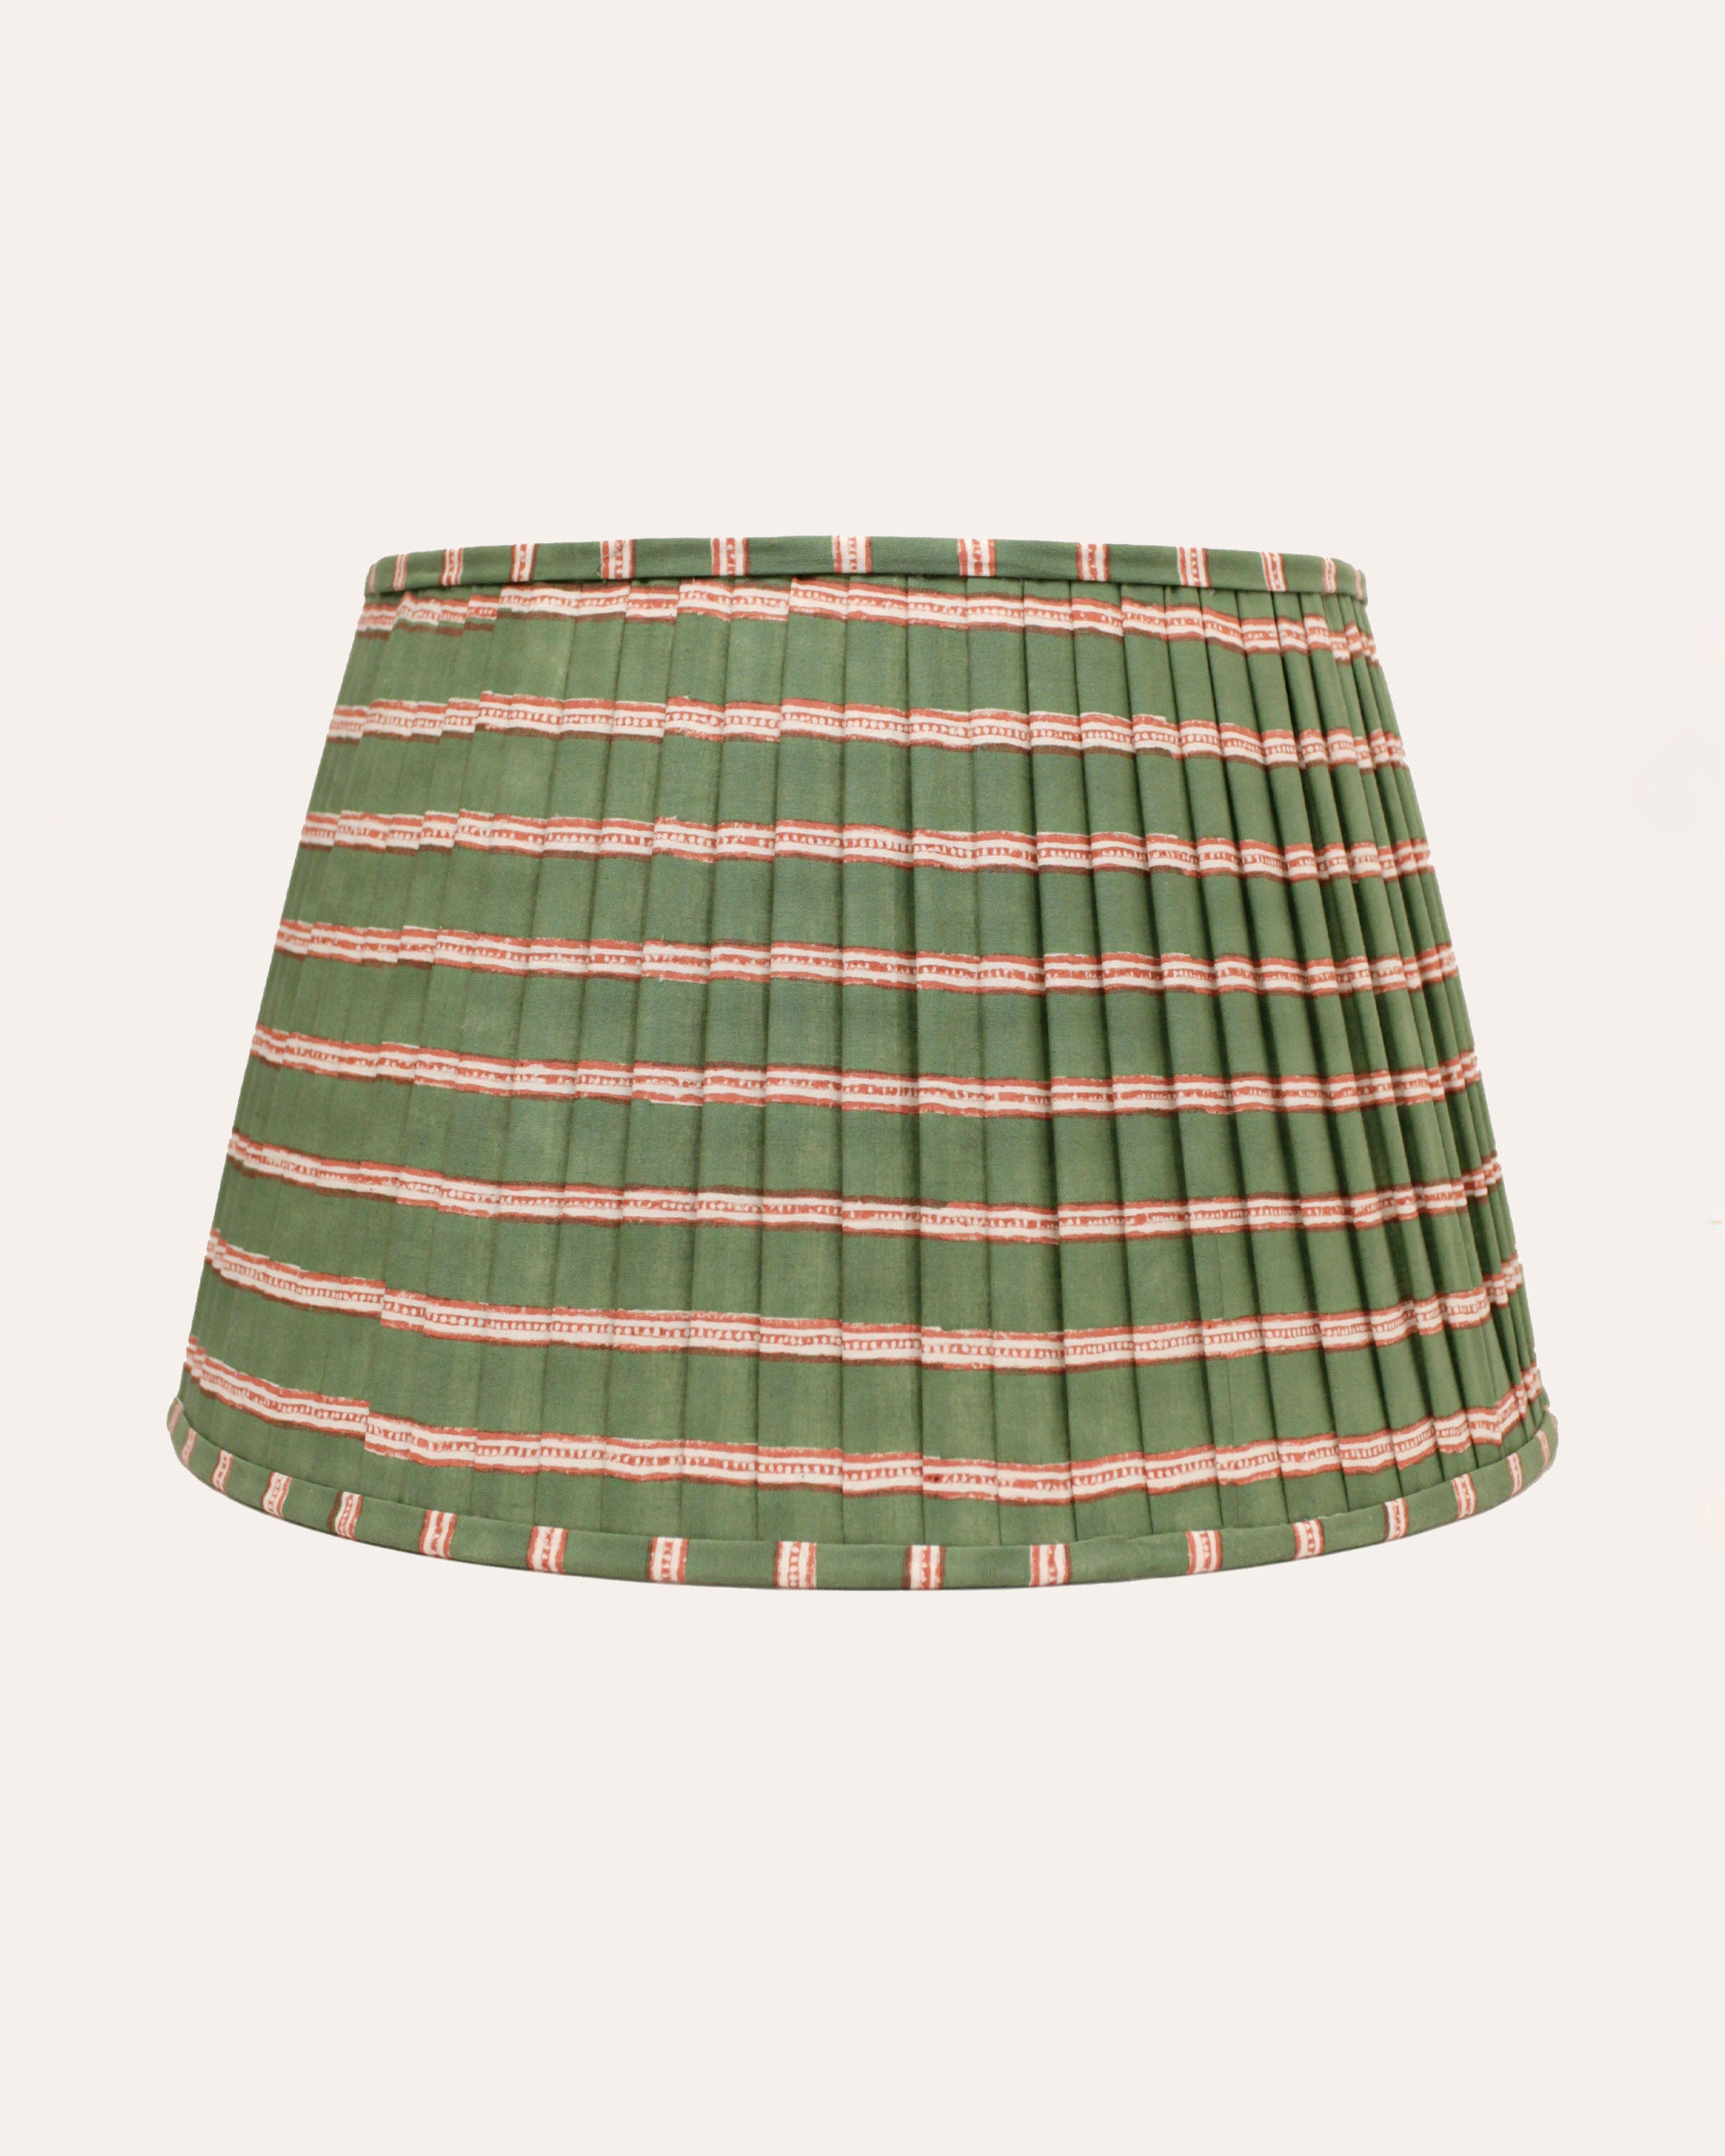 Edo Stripe Pleated Lampshade - Moss Green & Pink